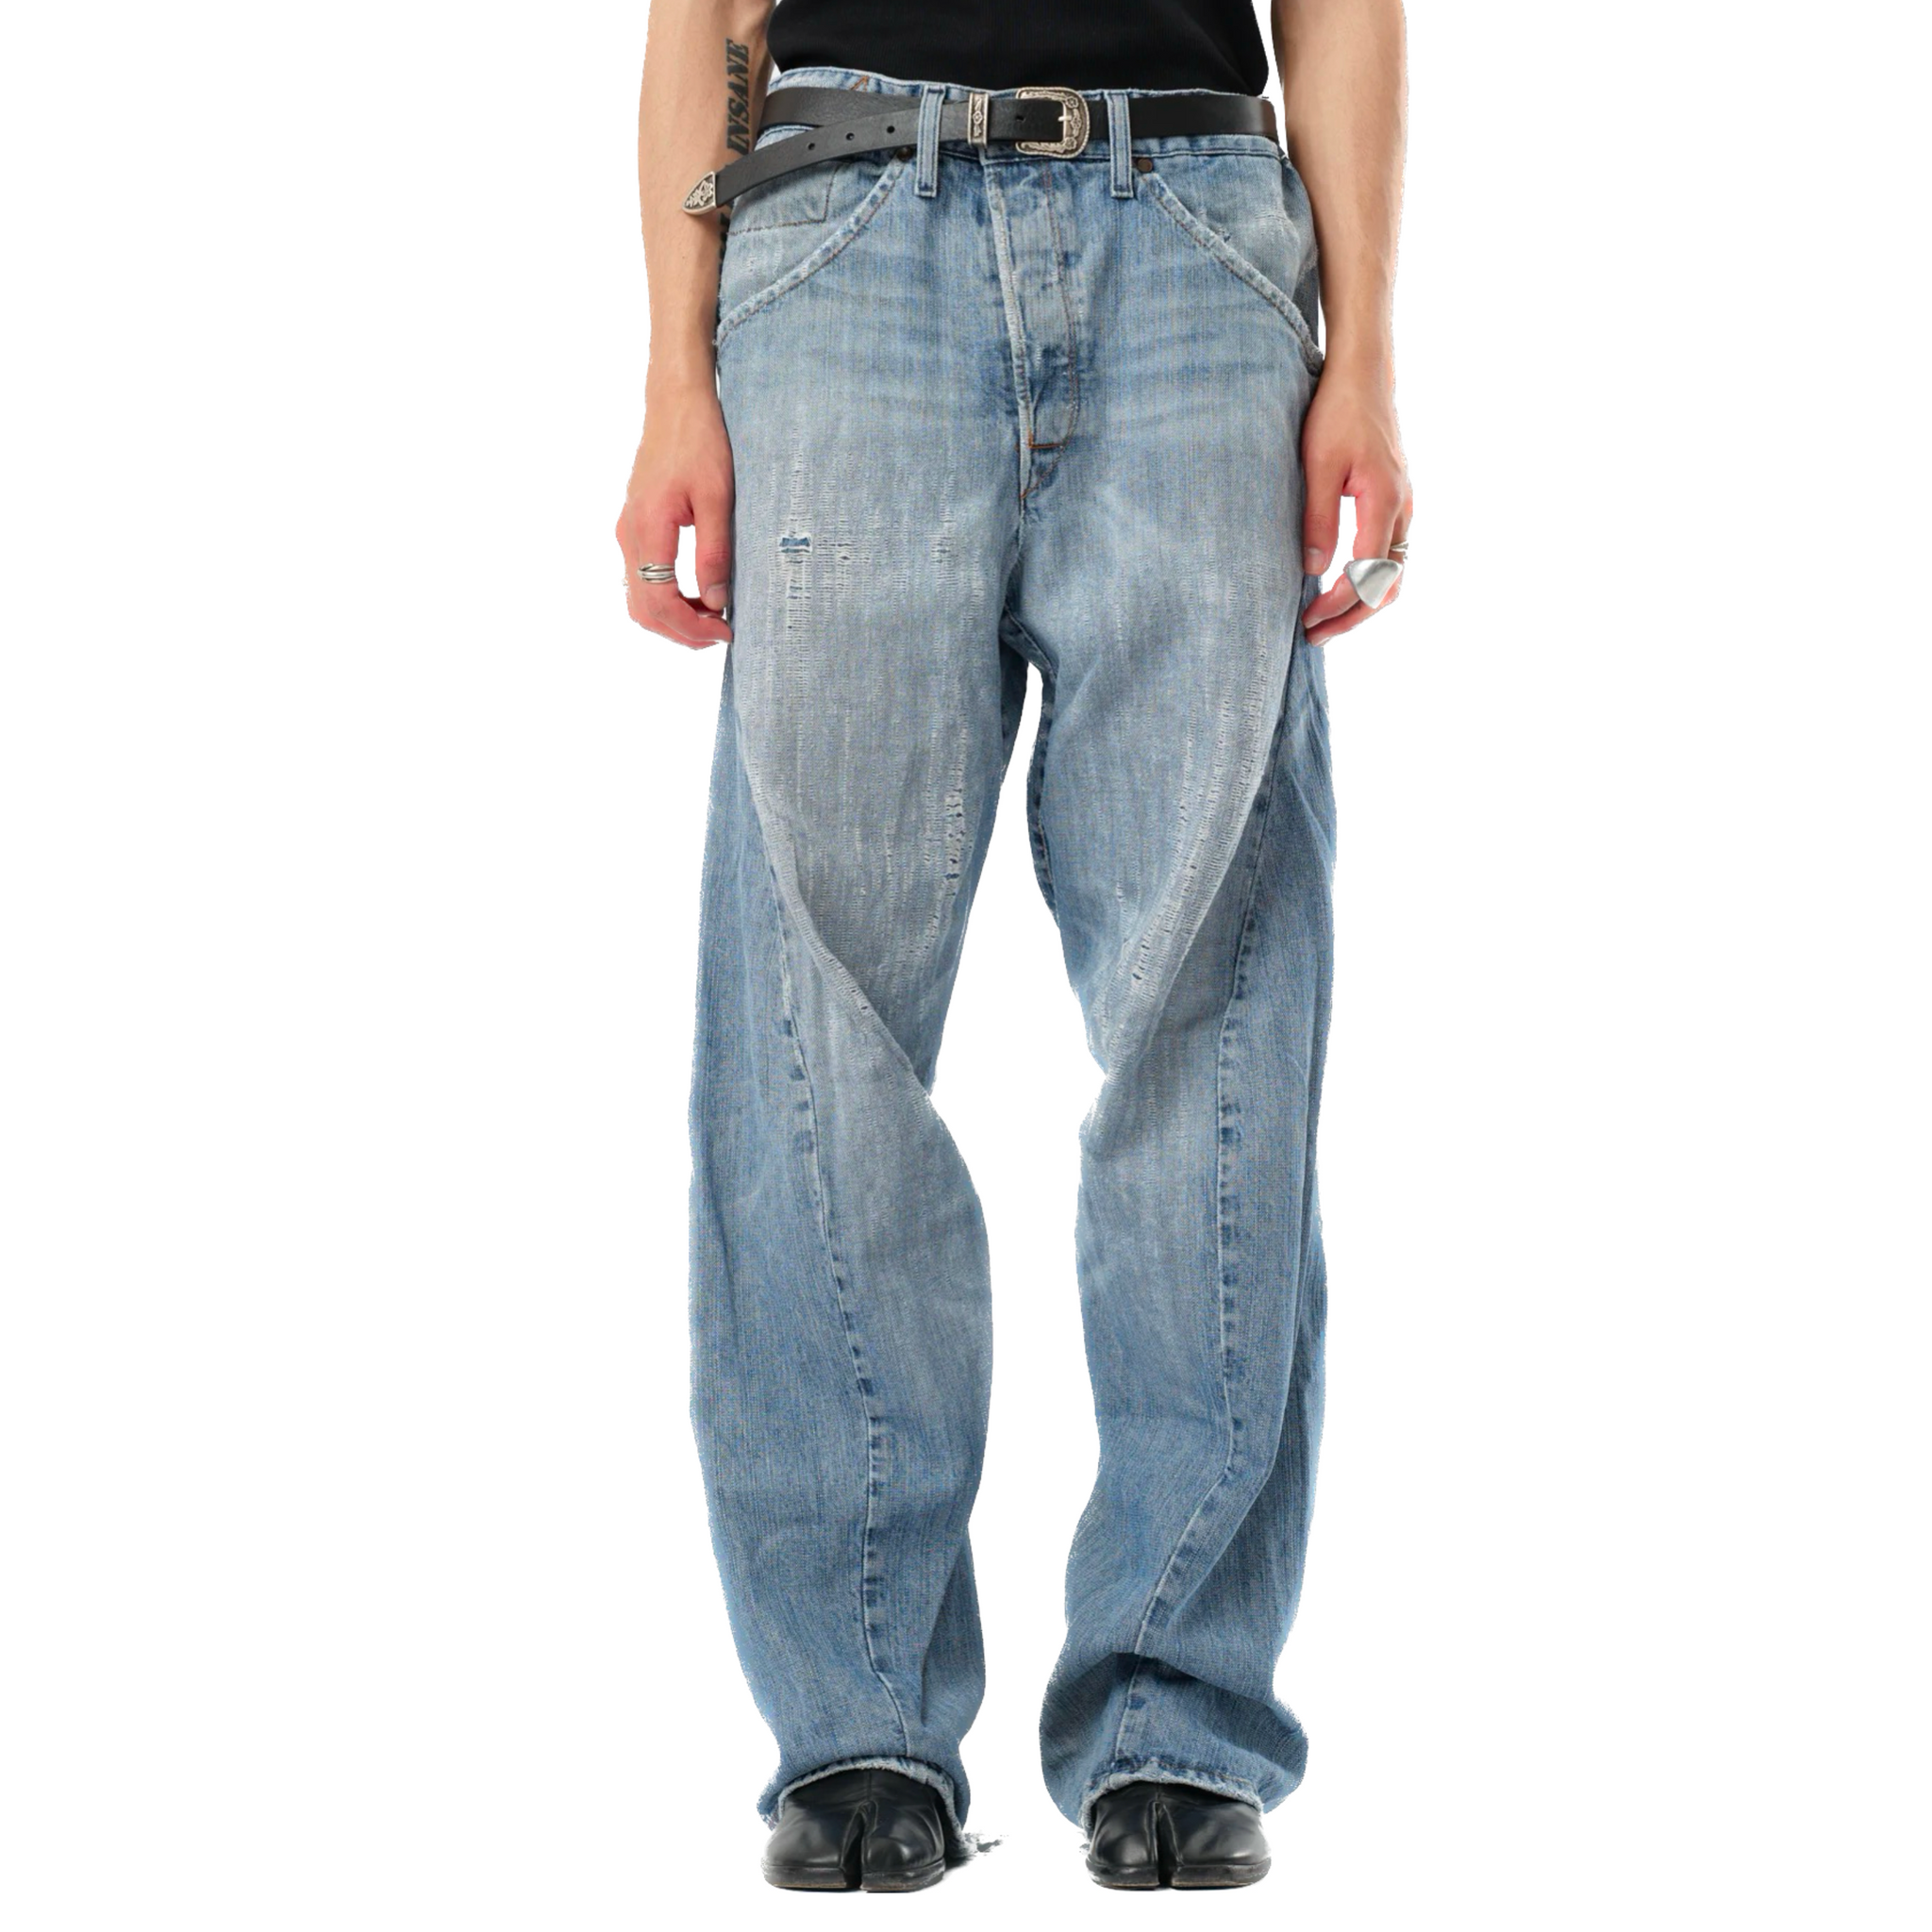 Levi’s Engineered 1990s Distressed Jeans